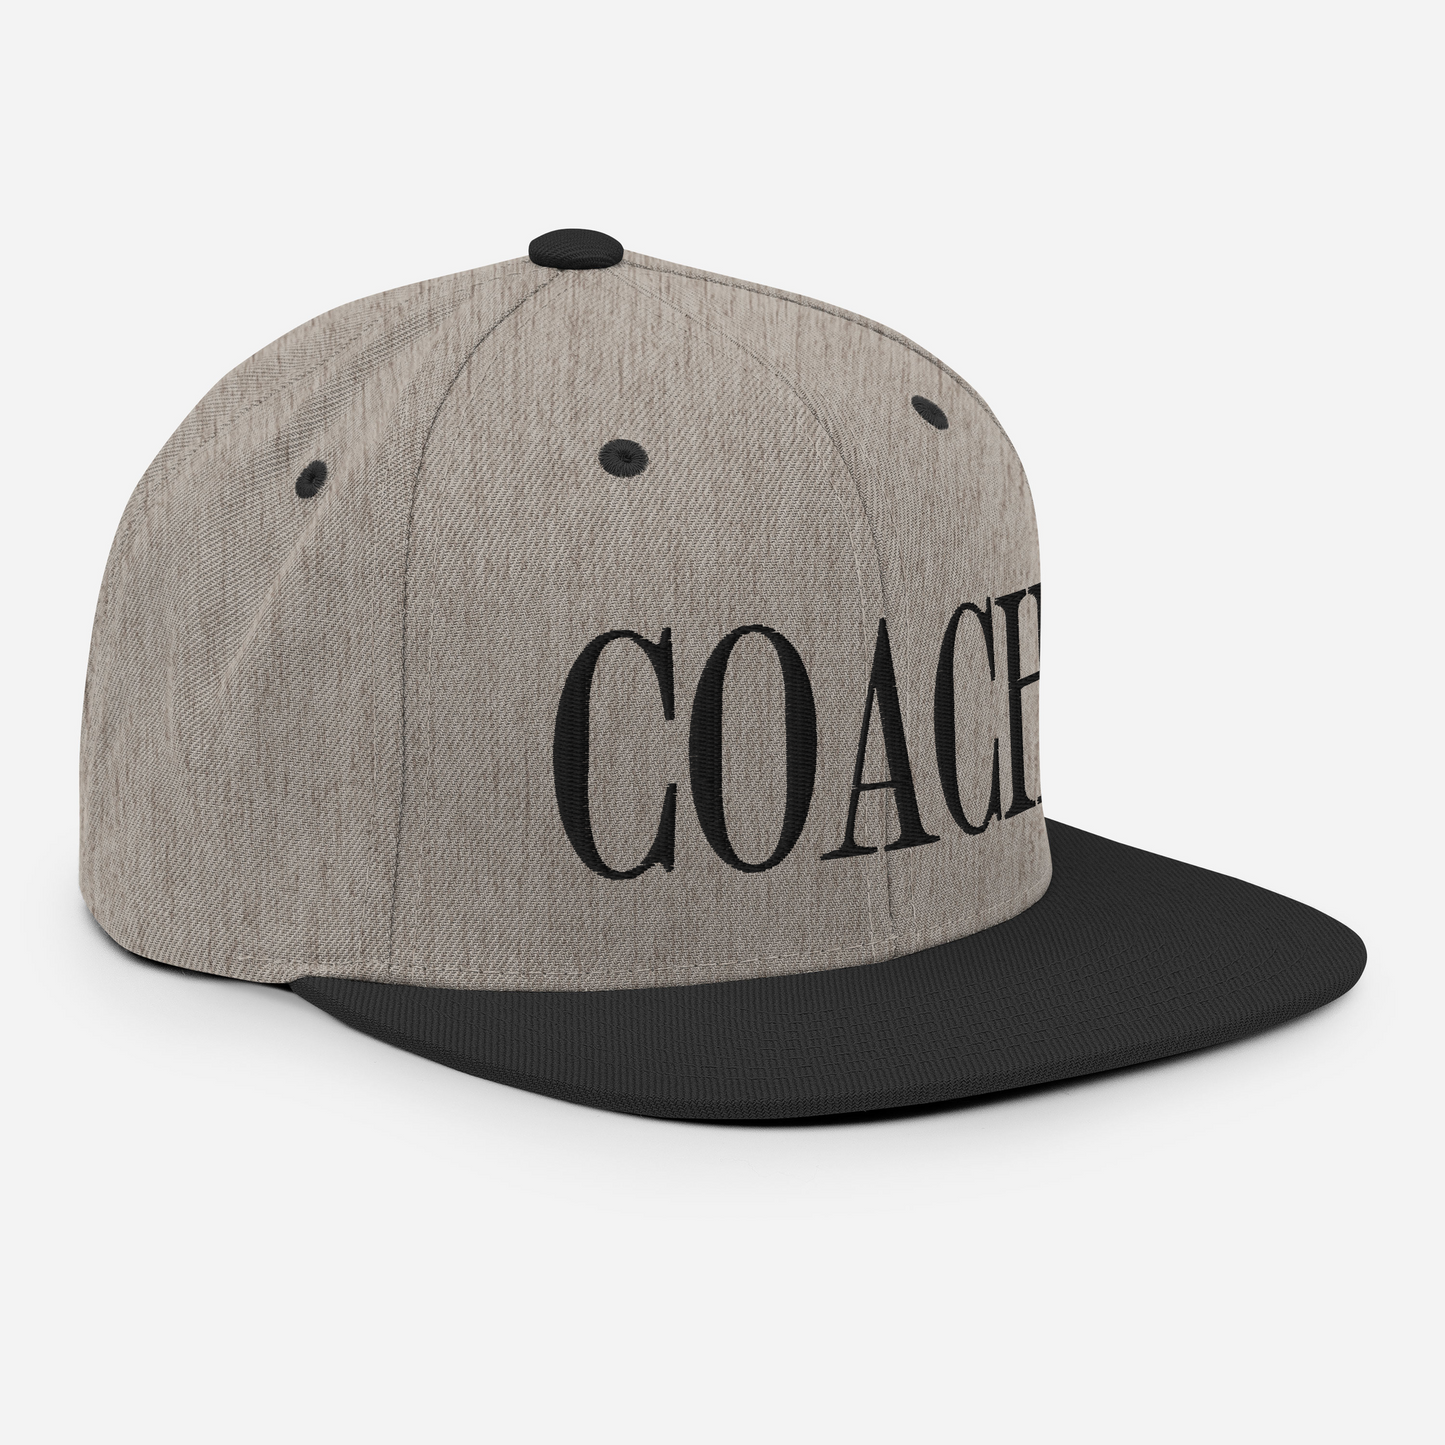 Across the Field Coach Retro Snapback Hat